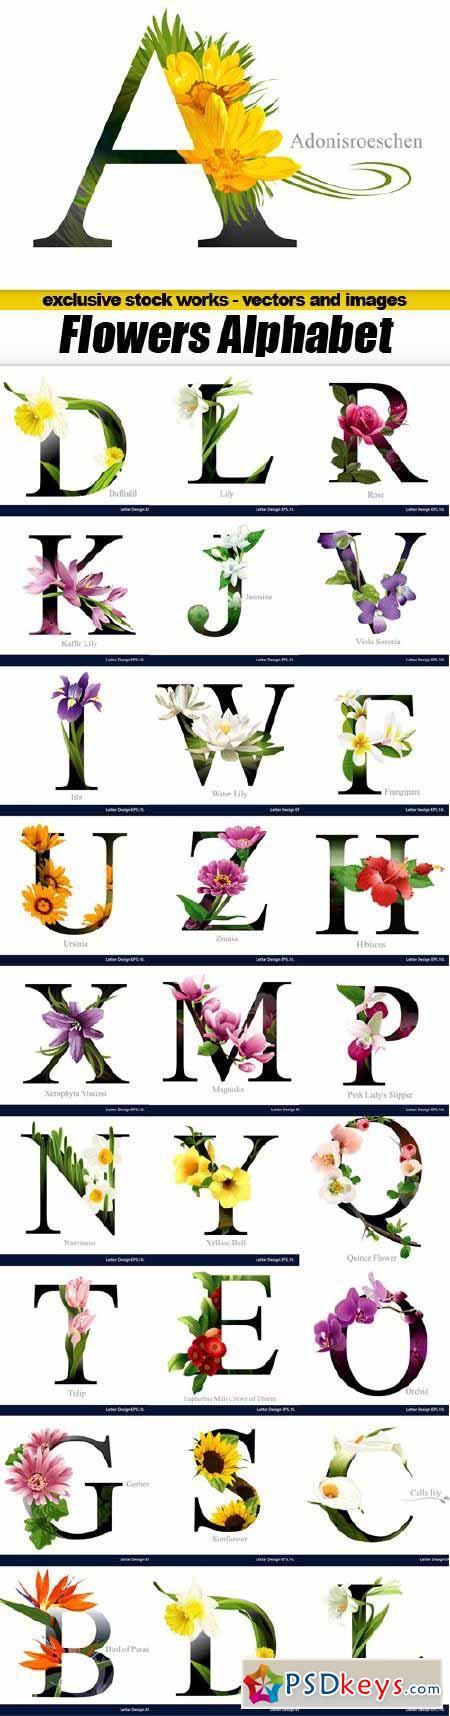 Flowers Alphabet - 26x EPS